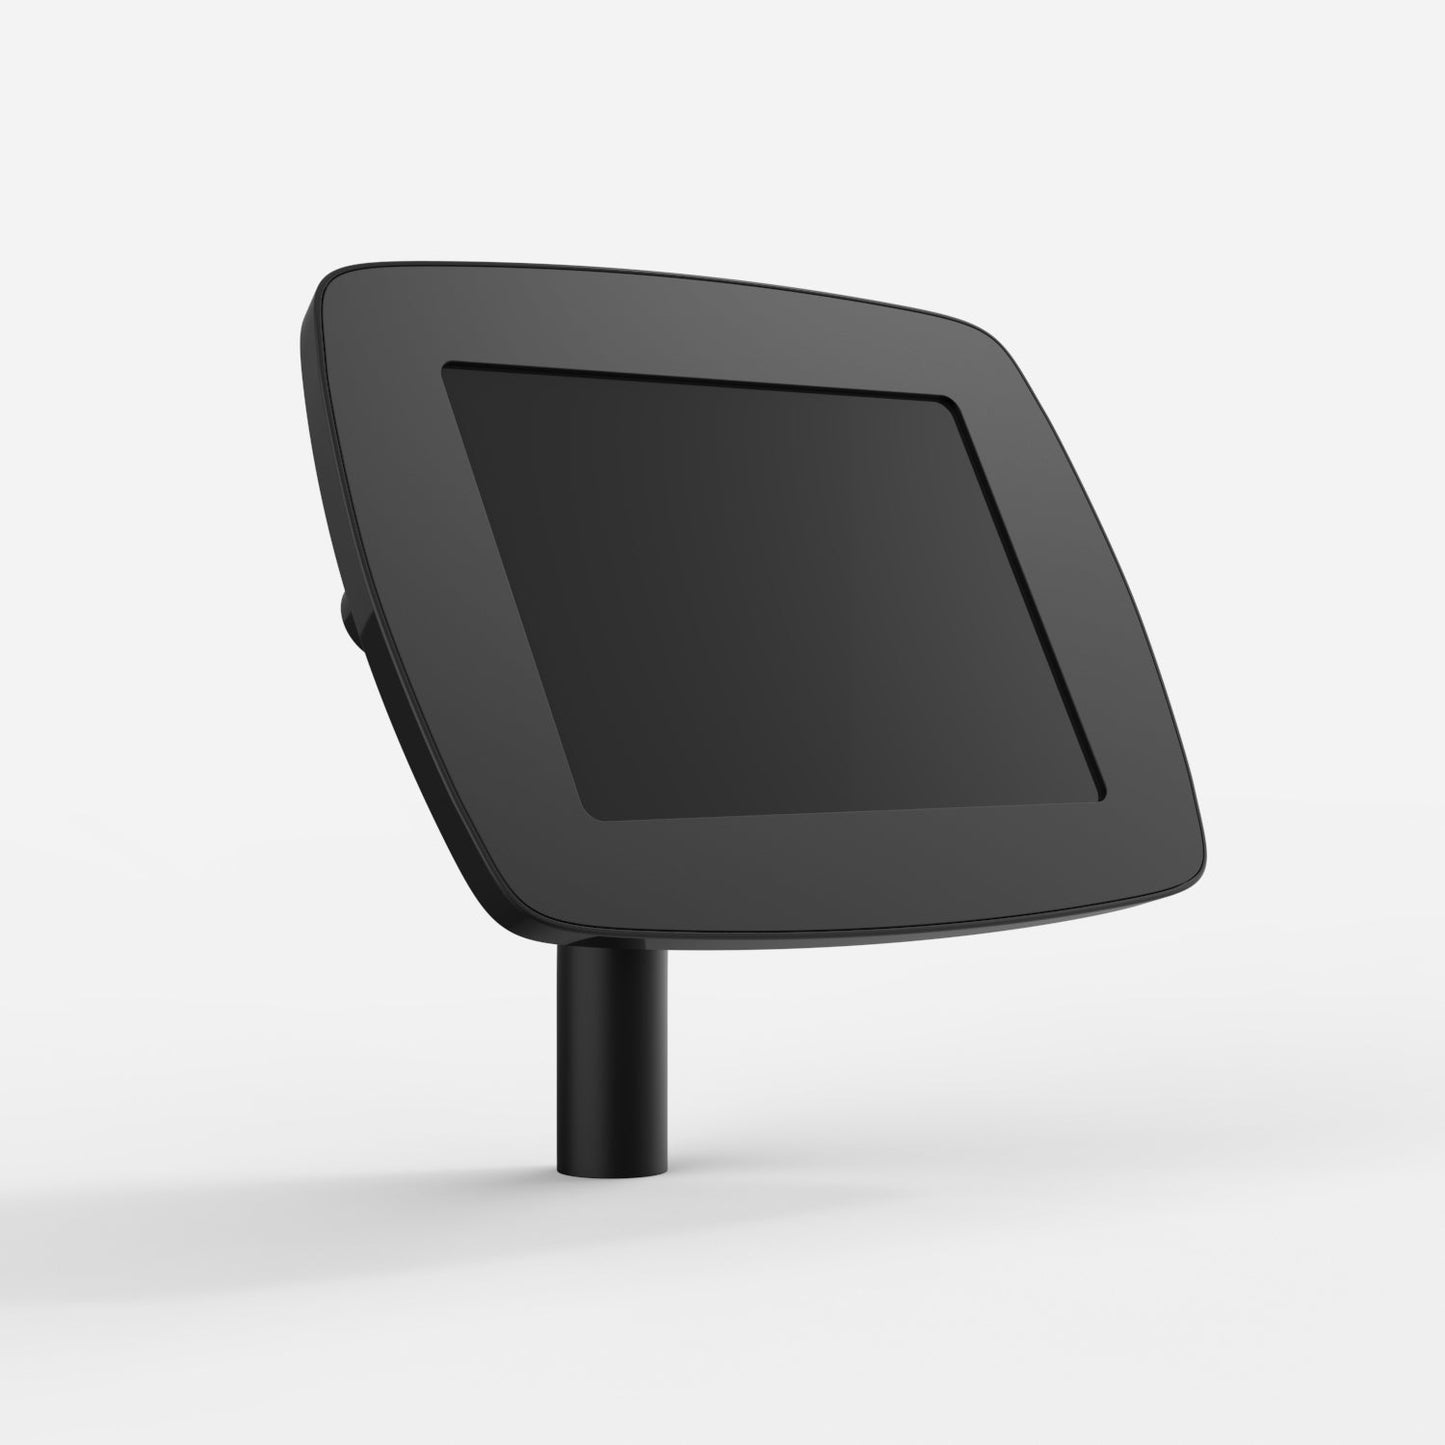 Bouncepad Static 60 - A secure tablet & iPad desk mount in black.